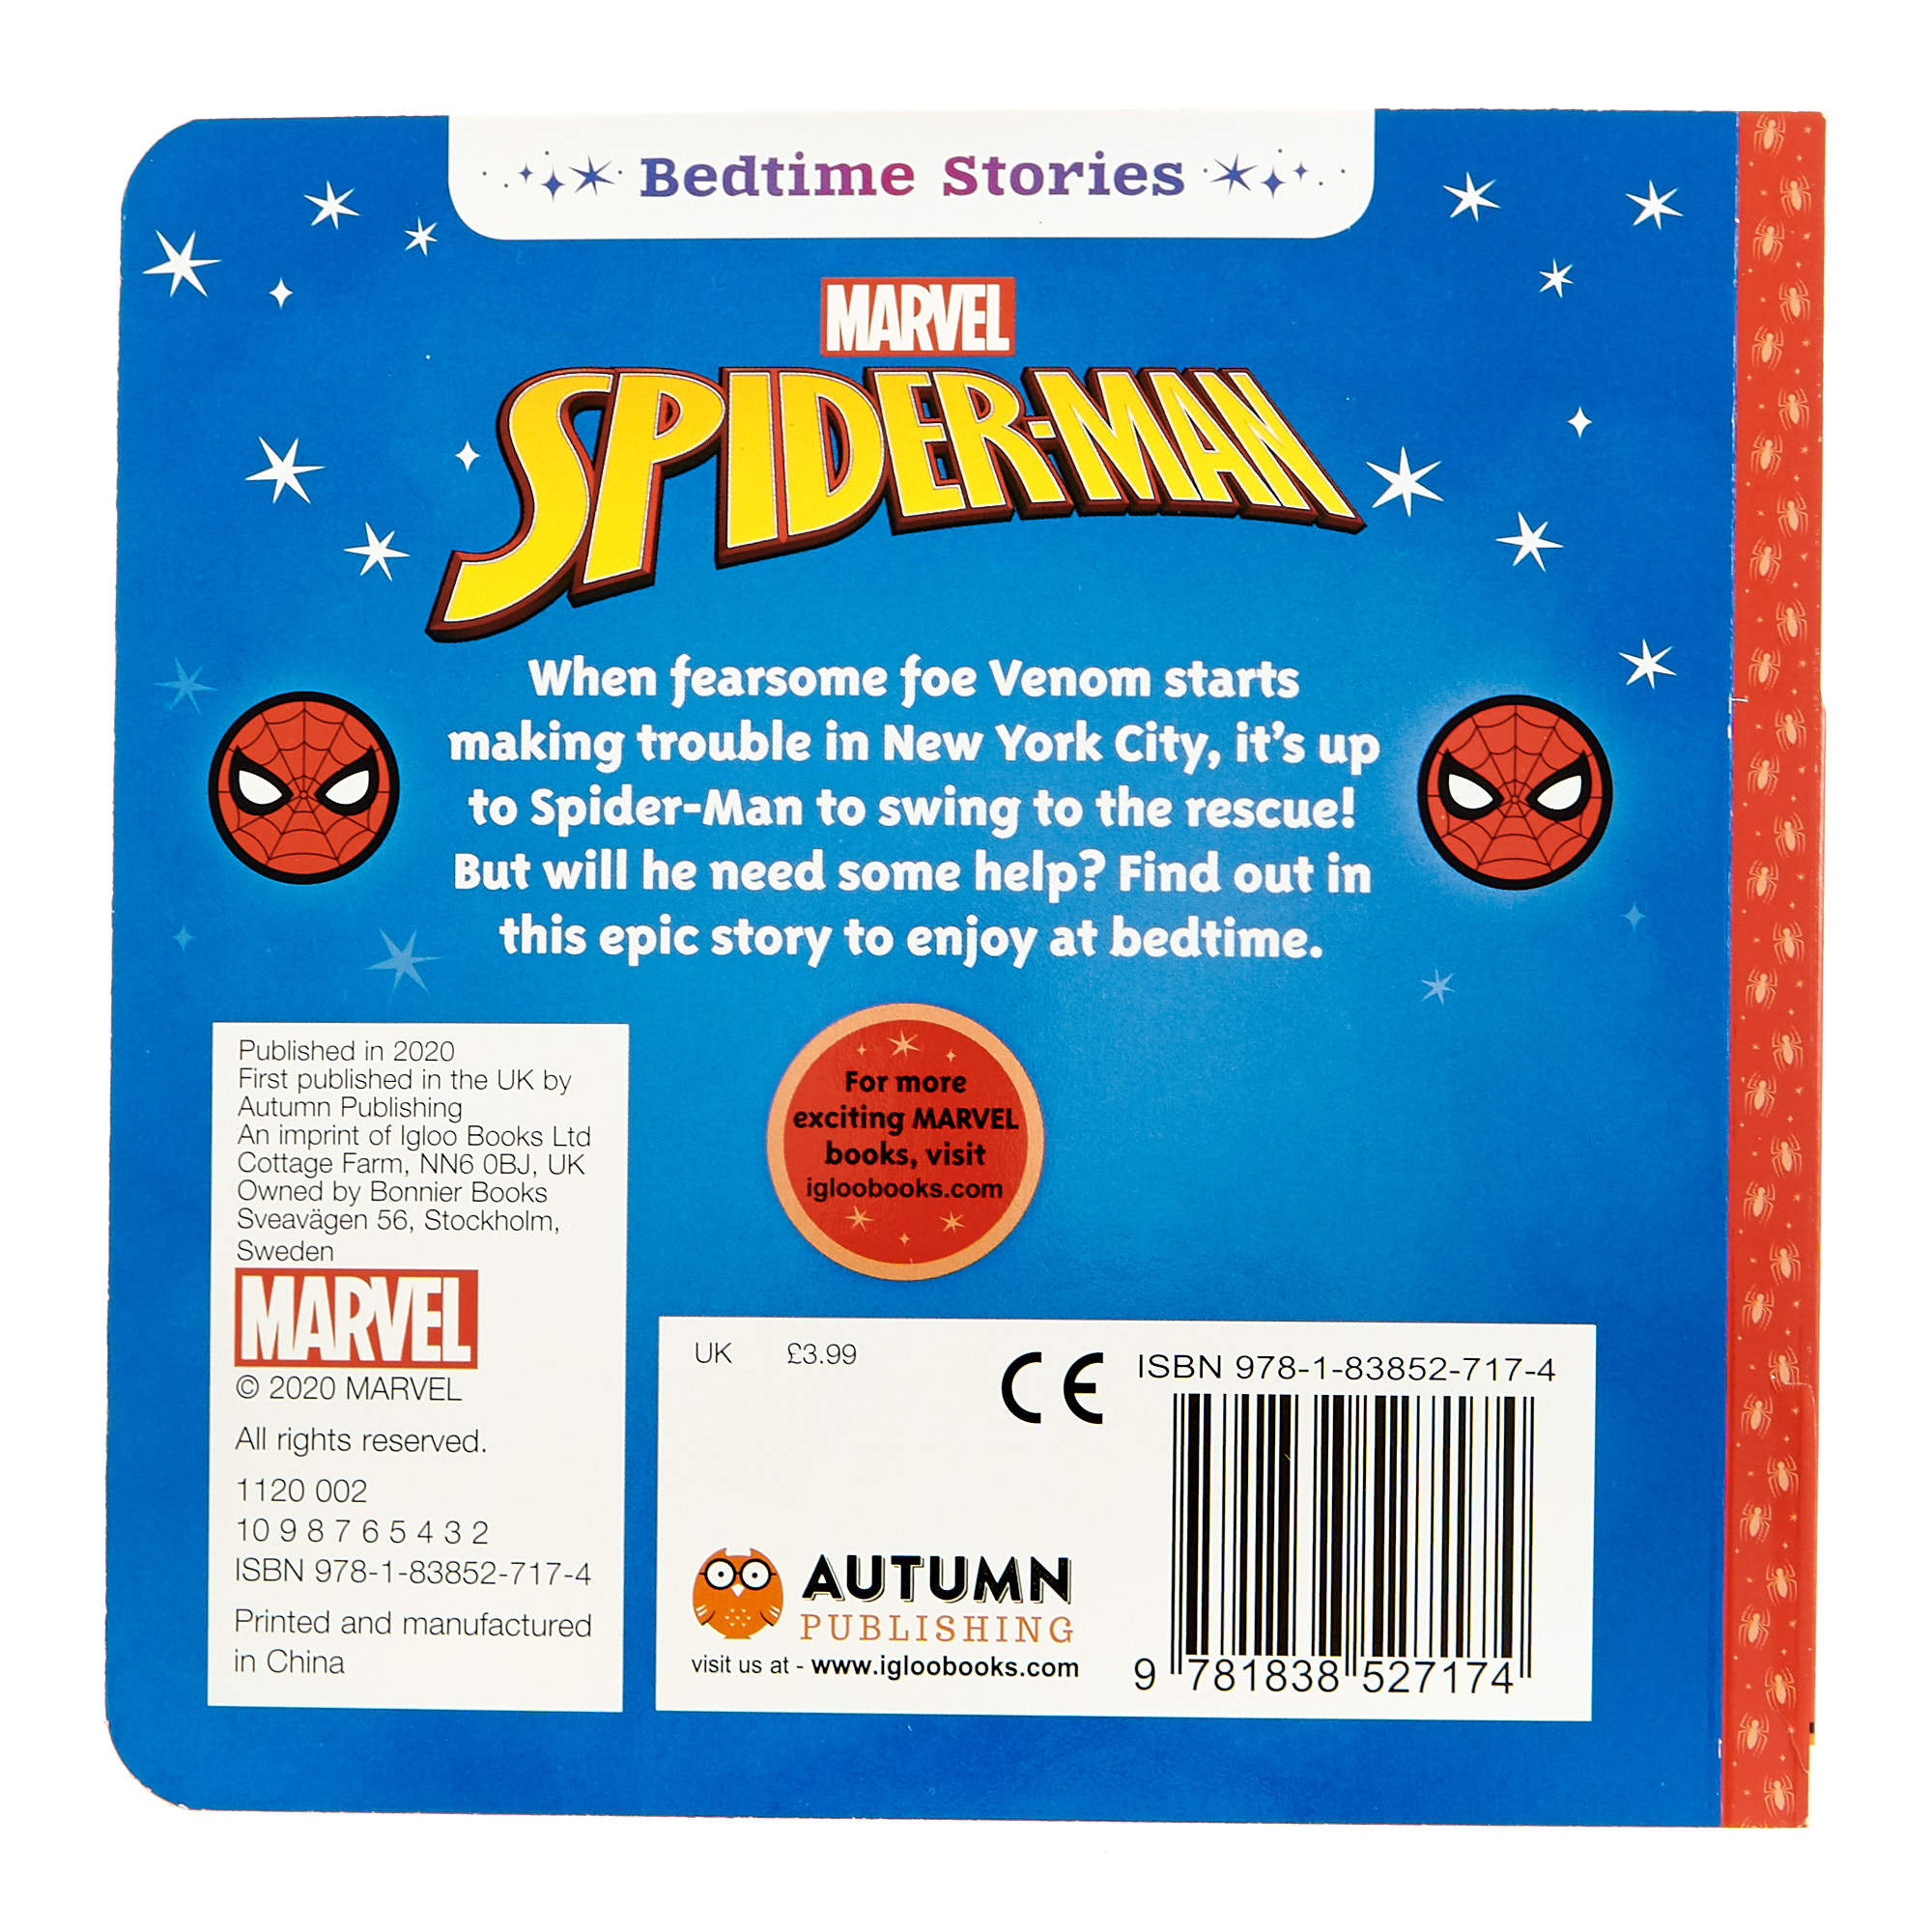 Disney Bedtime Stories - Marvel Spider-Man Book